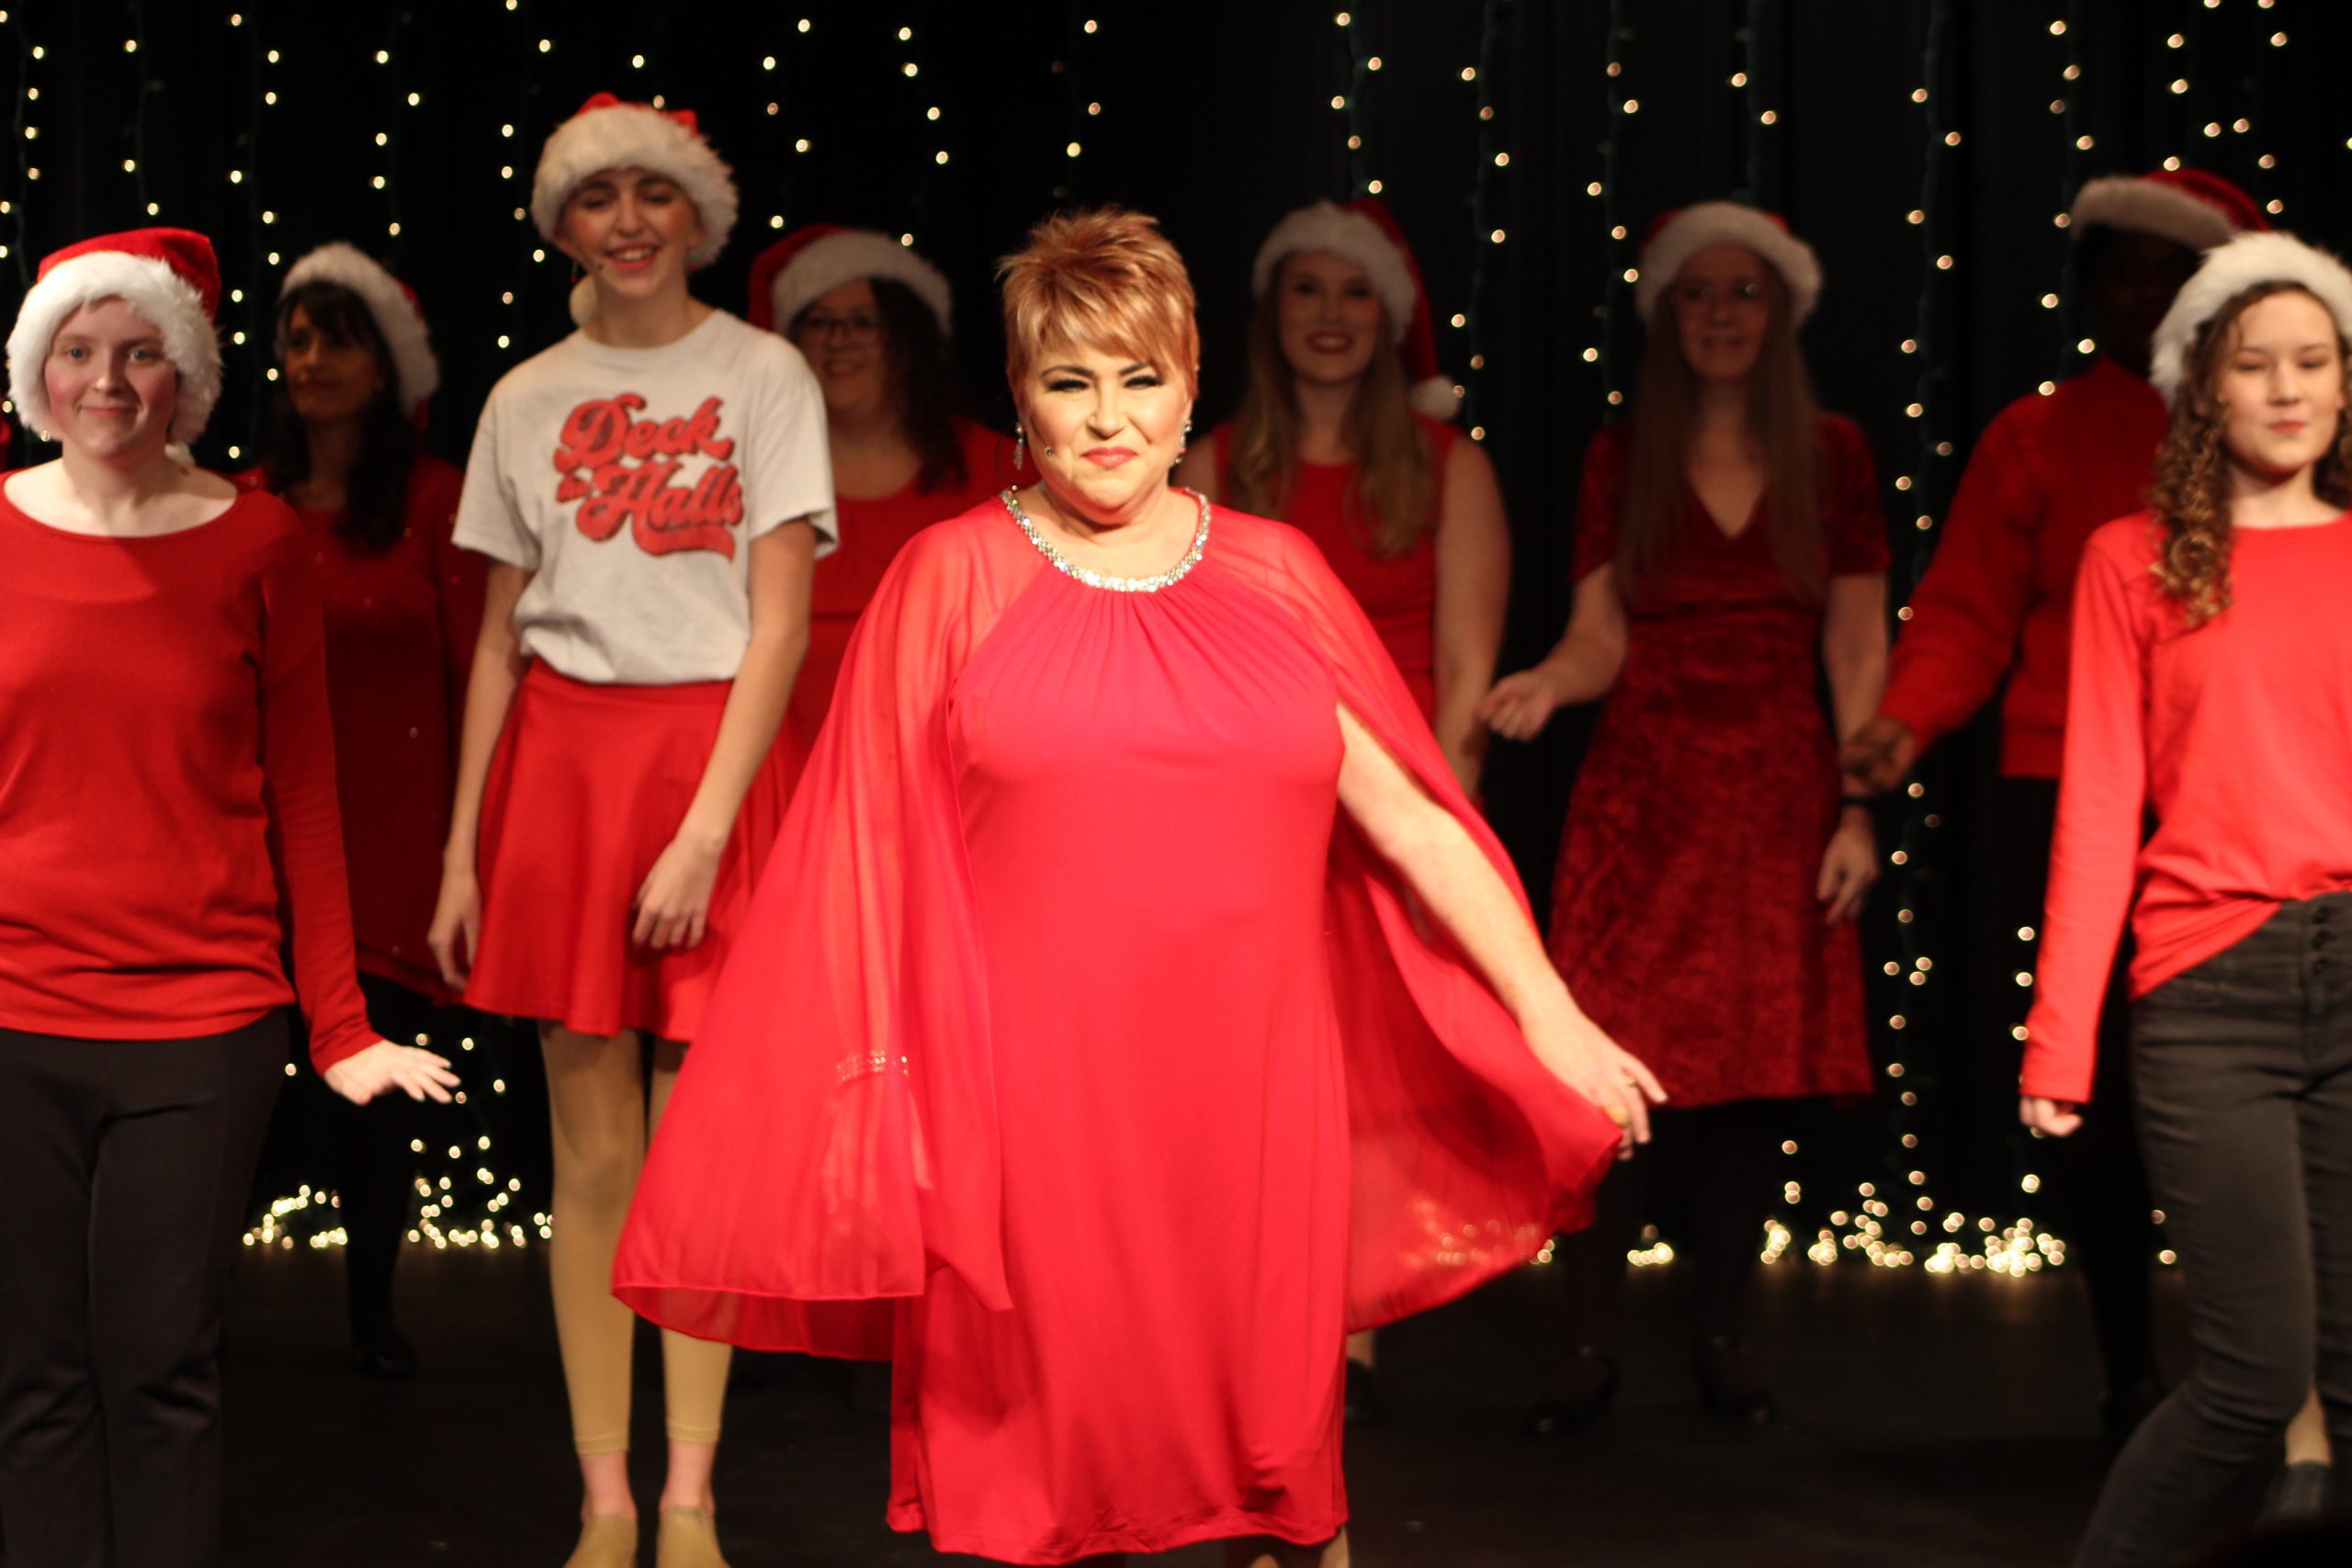 GALLERY: Leeds Arts Council kicks off the holiday season with 'Christmas Extravaganza'